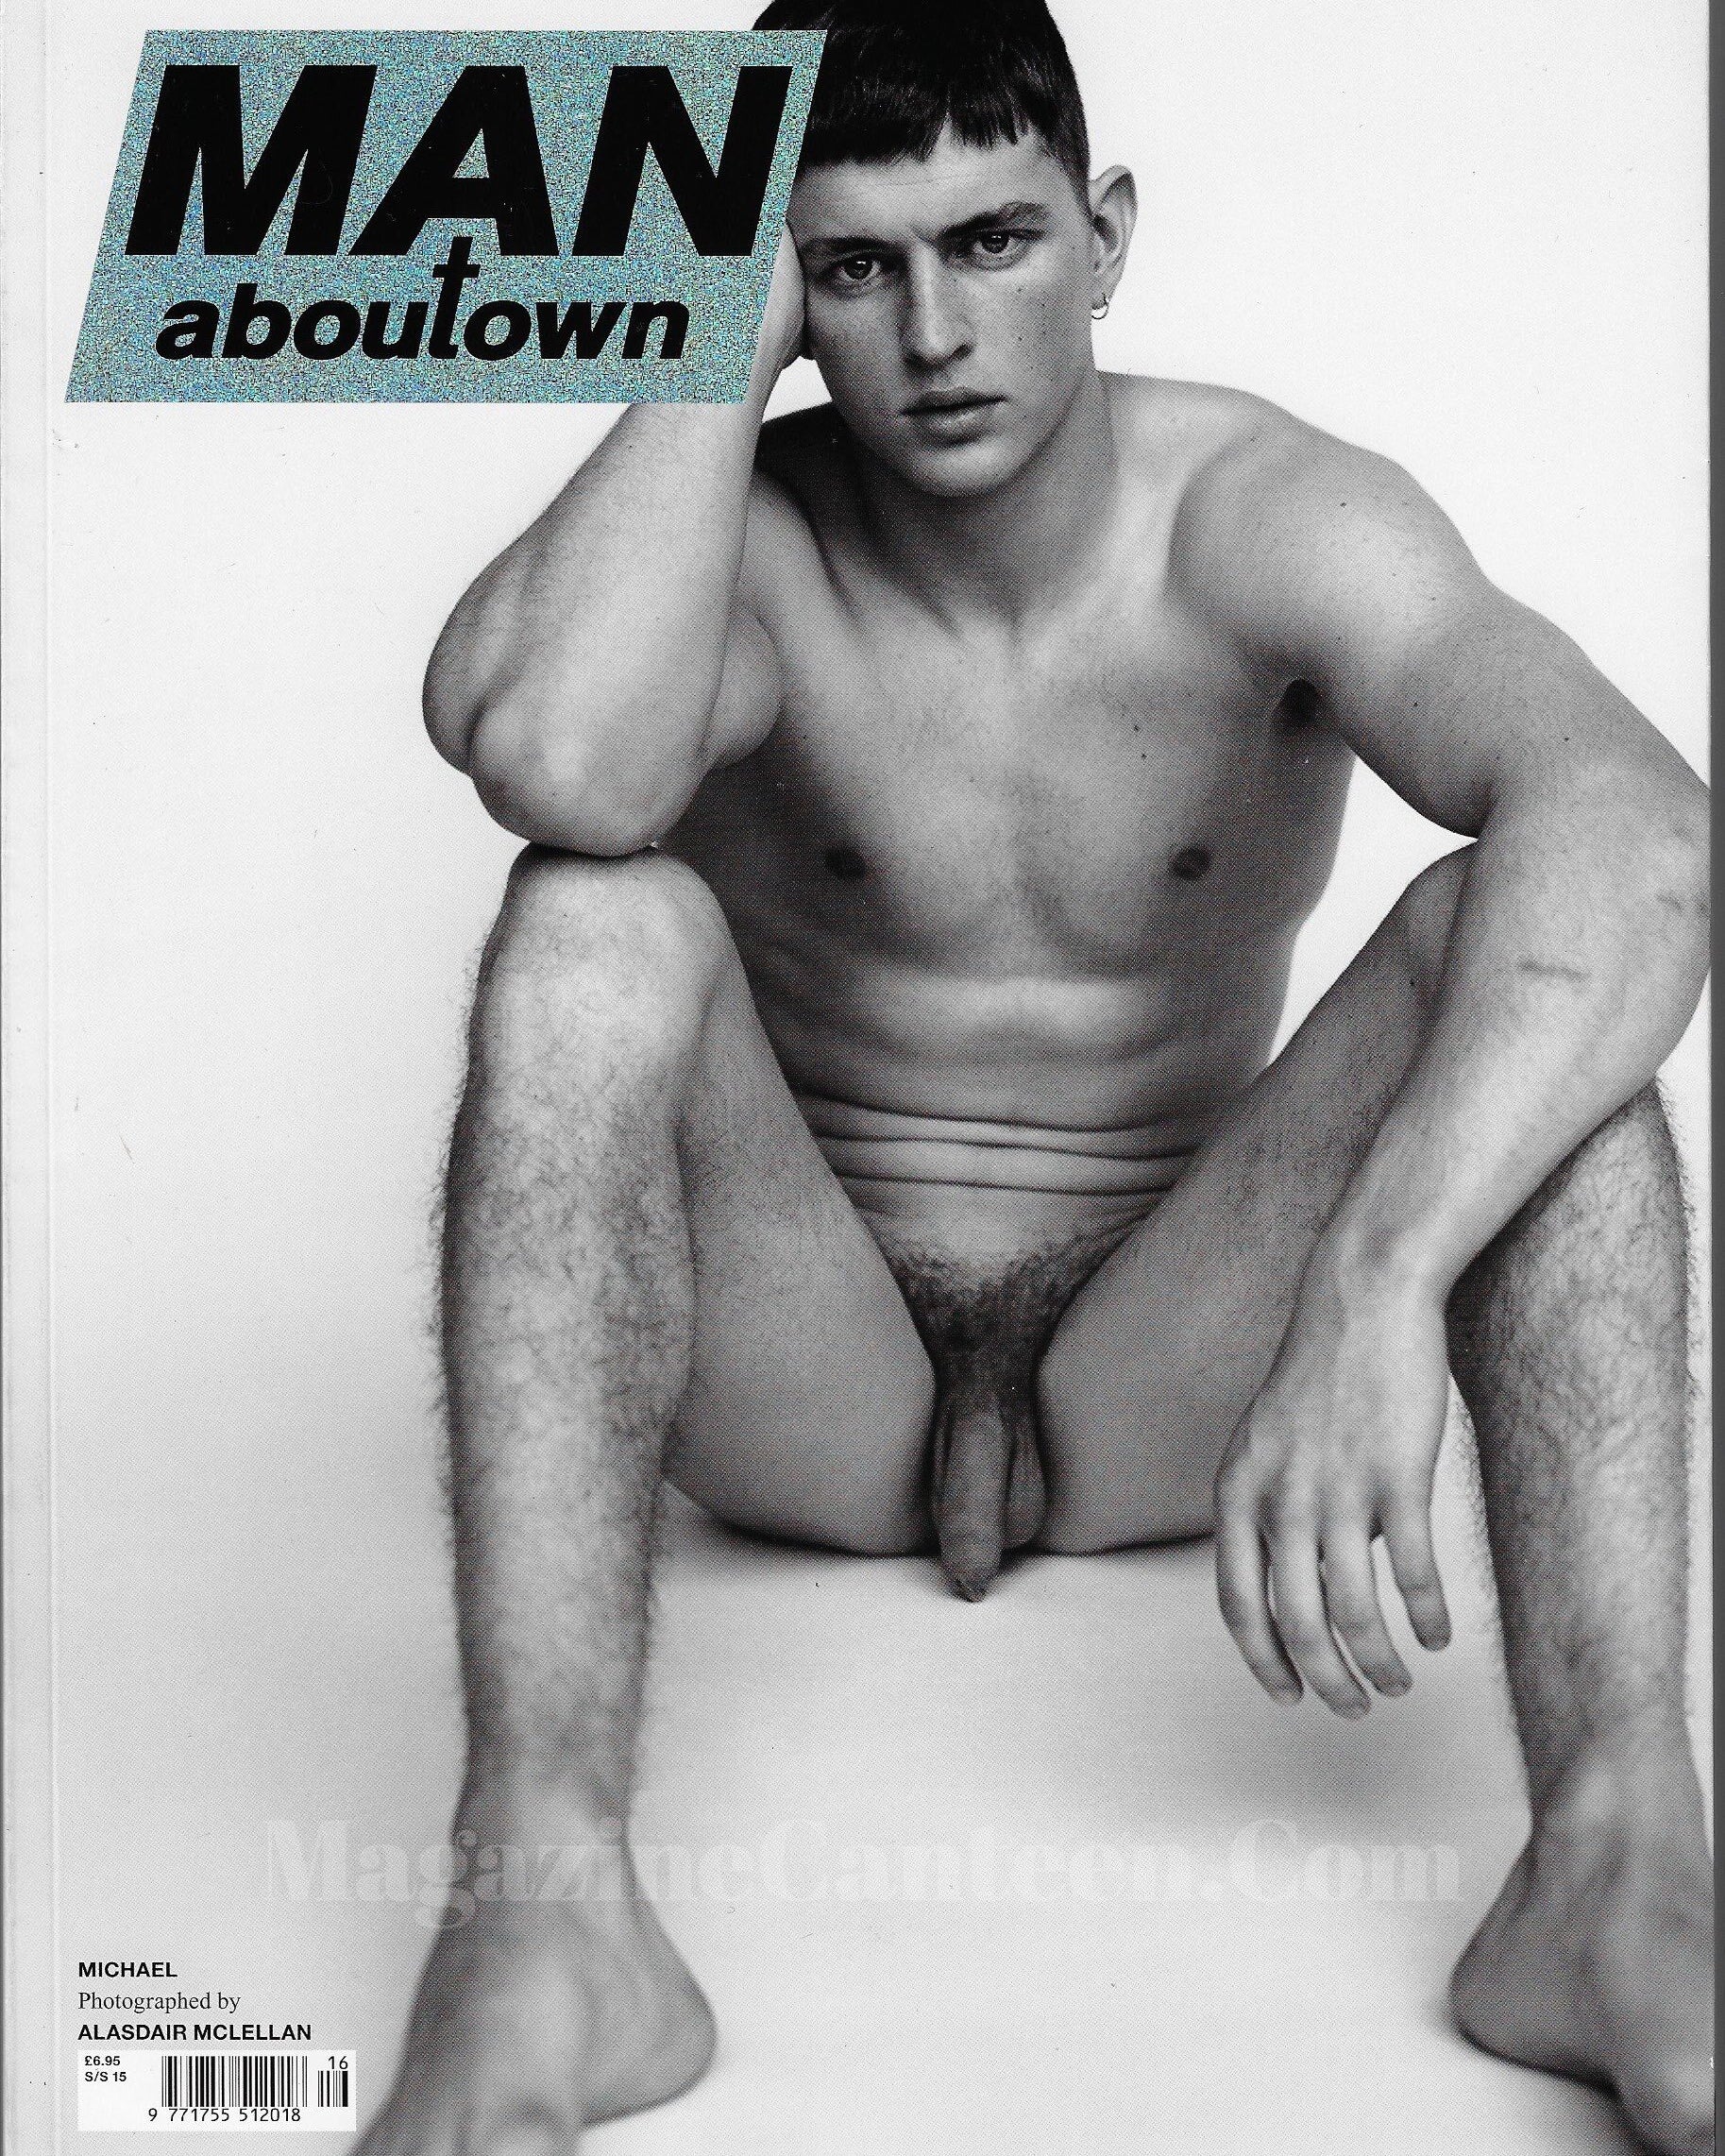  Man About Town Magazine - Matthew Alasdair McLellan 2015 naked